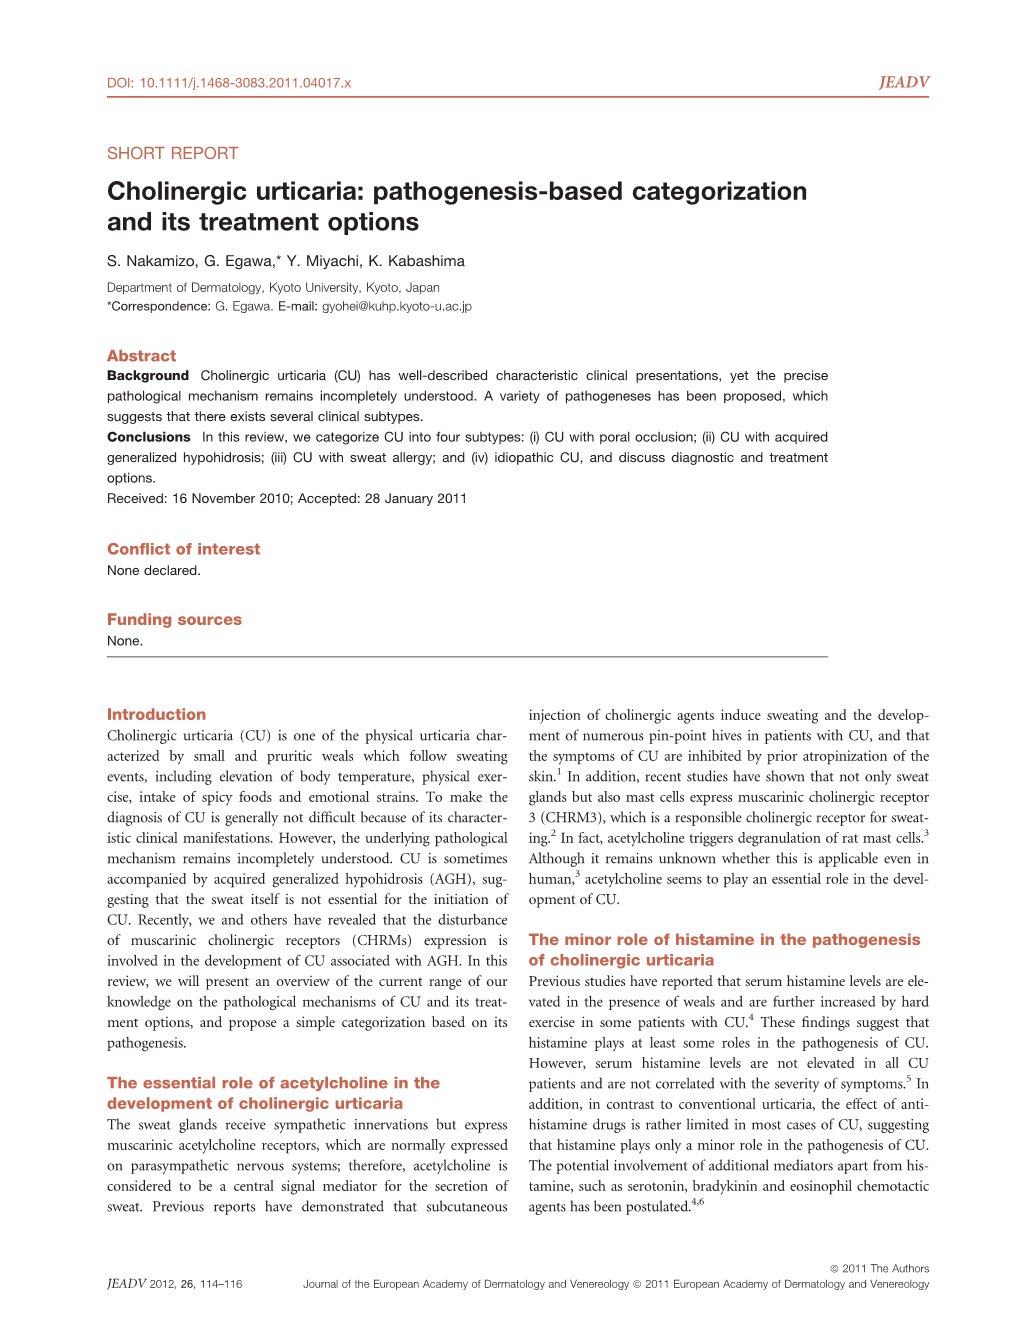 Cholinergic Urticaria: Pathogenesis-Based Categorization and Its Treatment Options